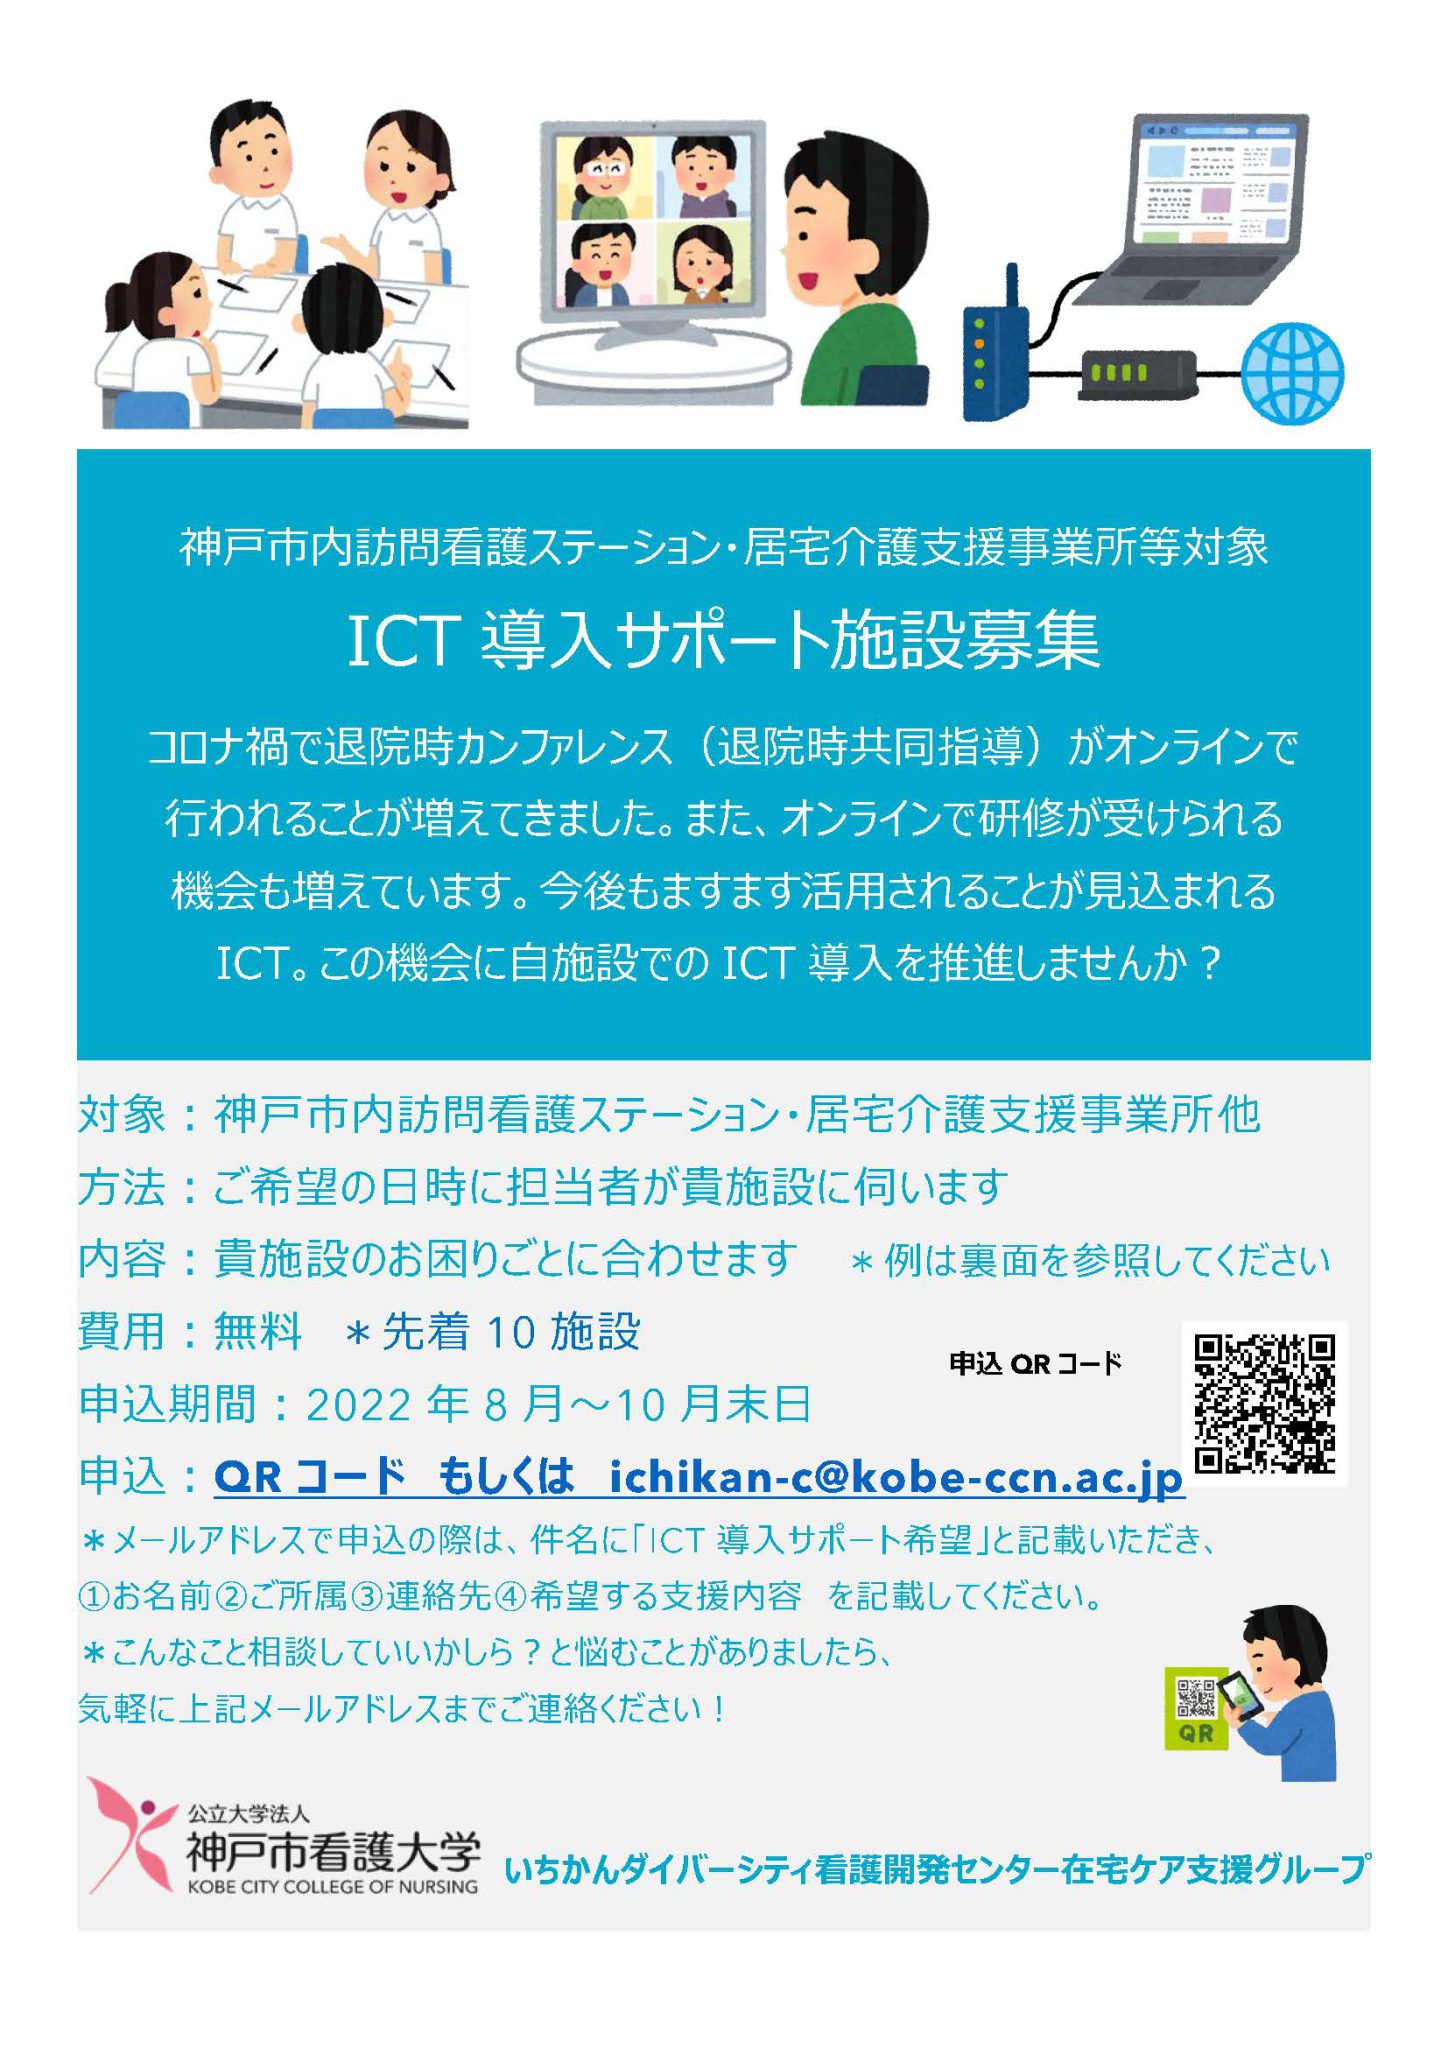 「ICT導入サポート施設募集」のお知らせ